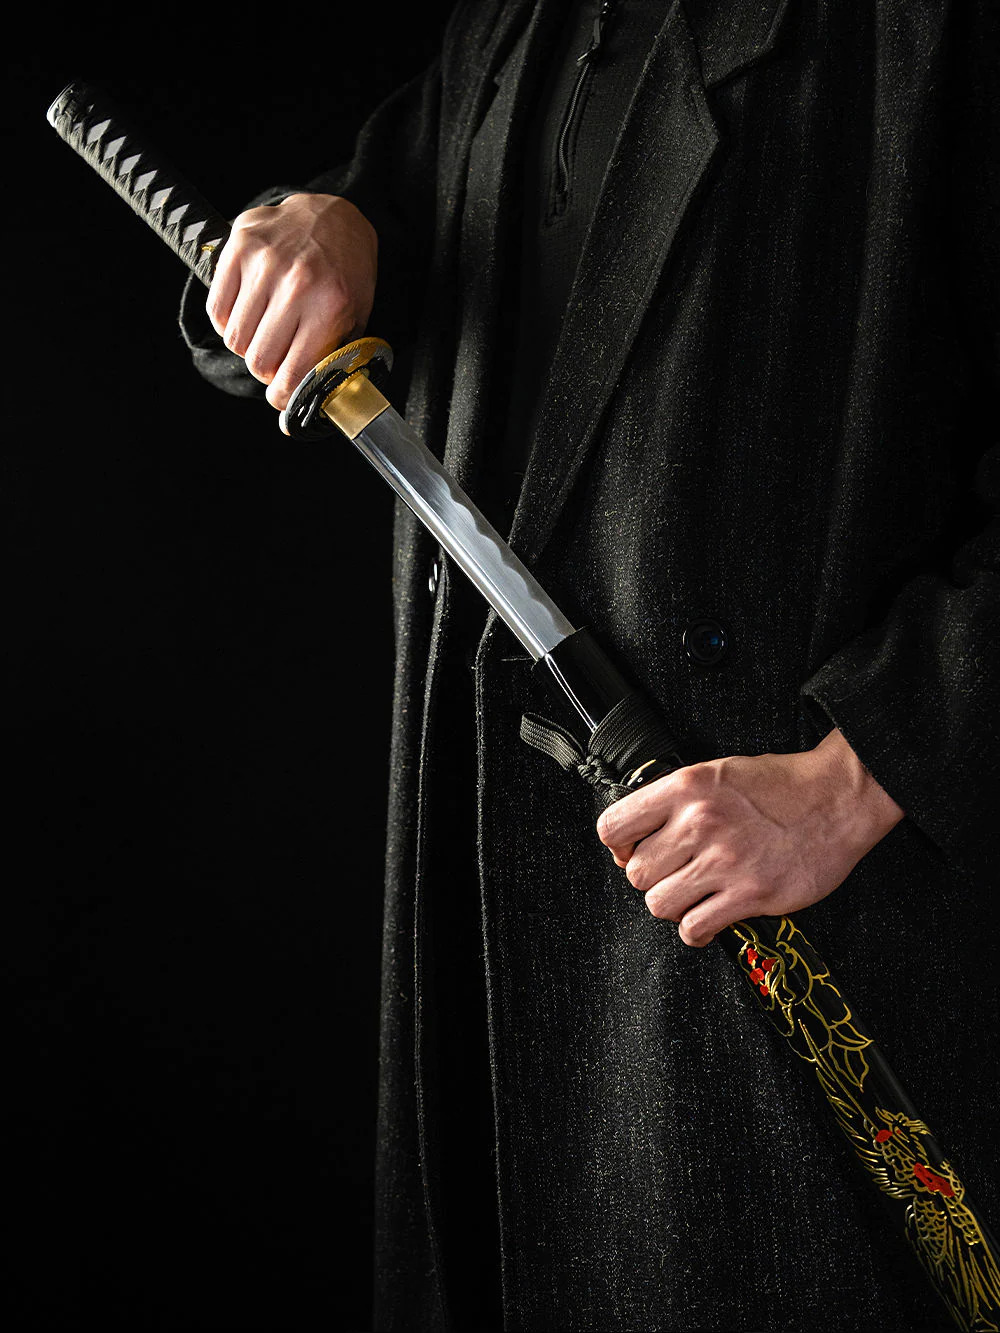 Katana - The Iconic Japanese Sword